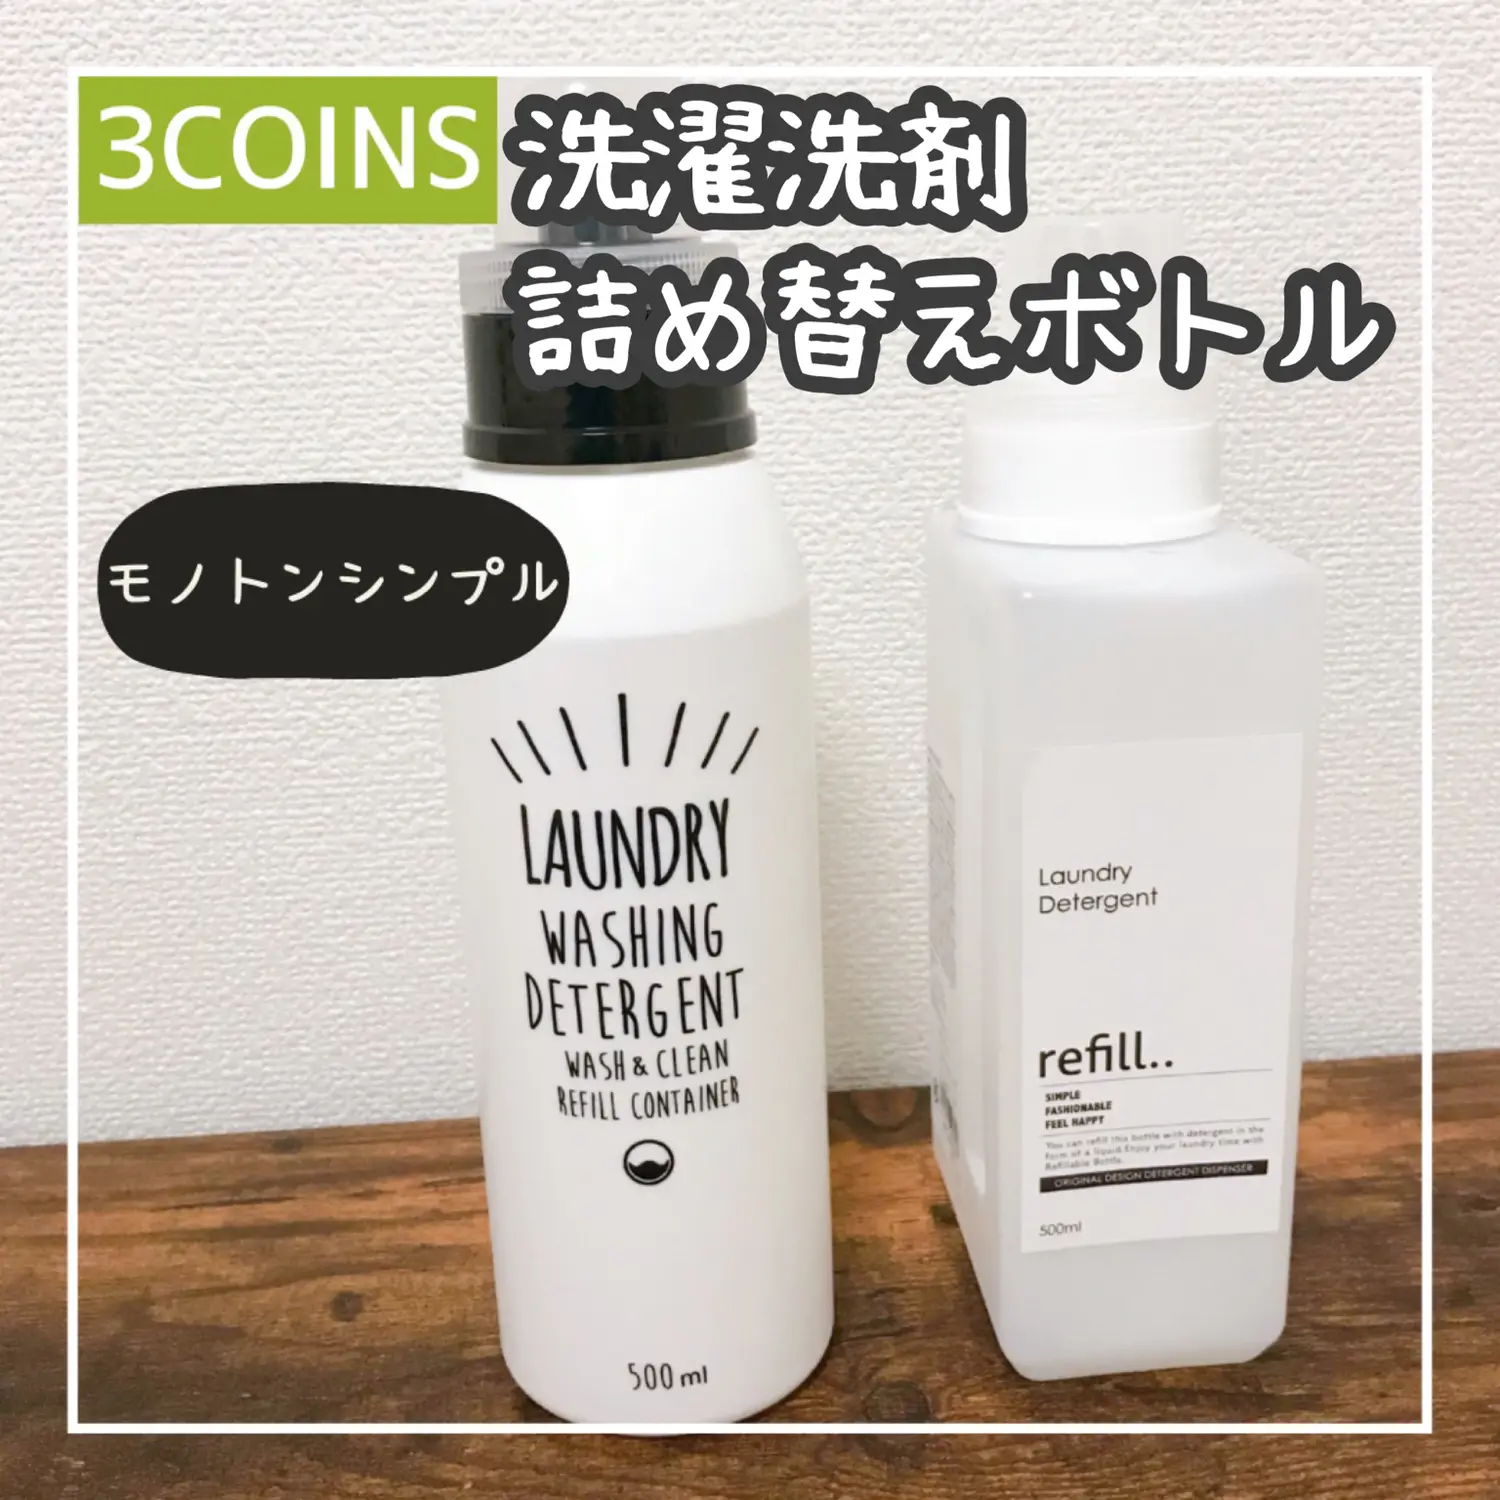 3coins シンプルおしゃれ 洗濯洗剤詰め替えボトル Usuke 新米パパが投稿した記事 Lemon8